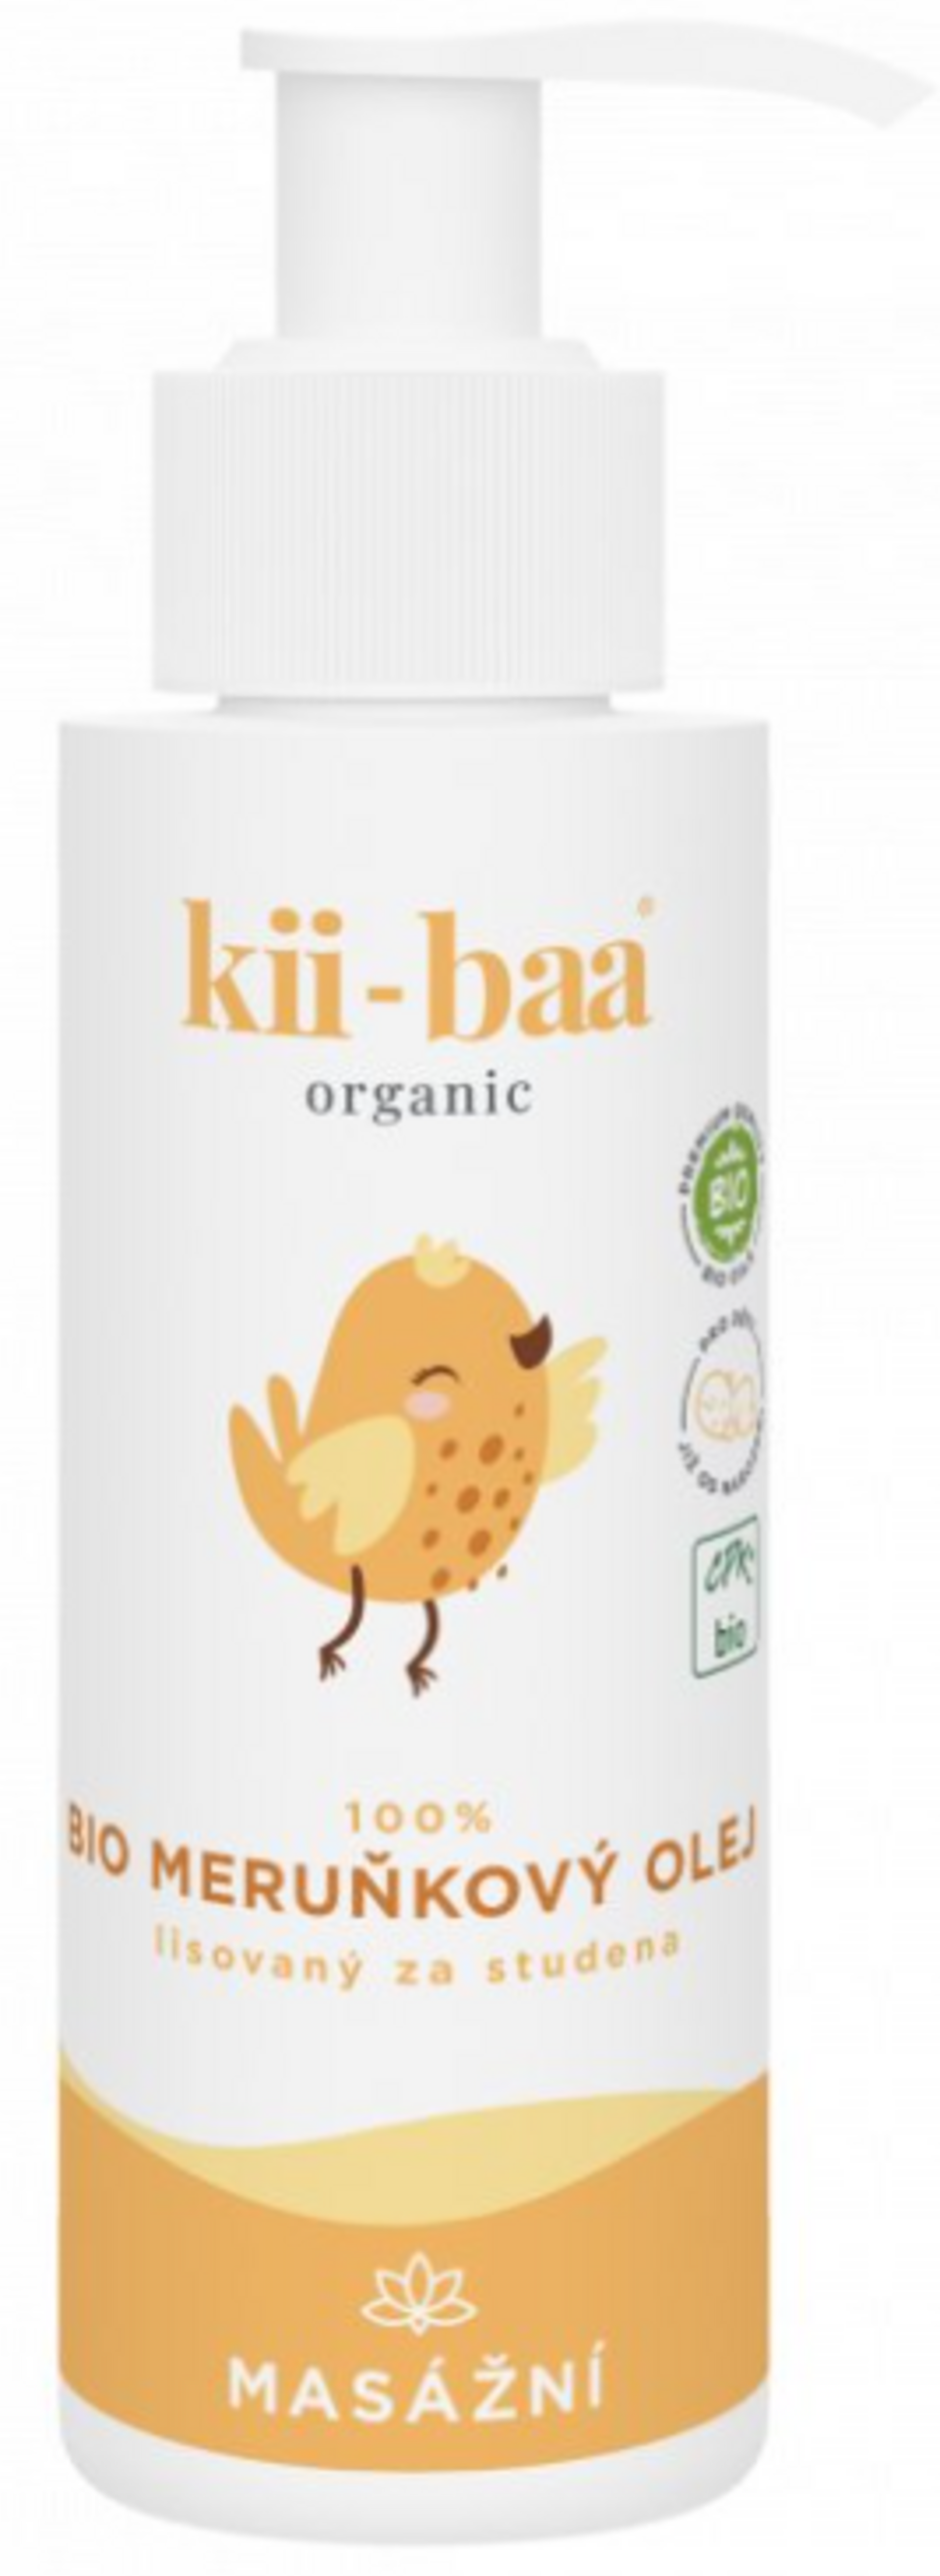 Levně Kii-baa organic 100% Meruňkový olej 0+ masážní BIO 100 ml